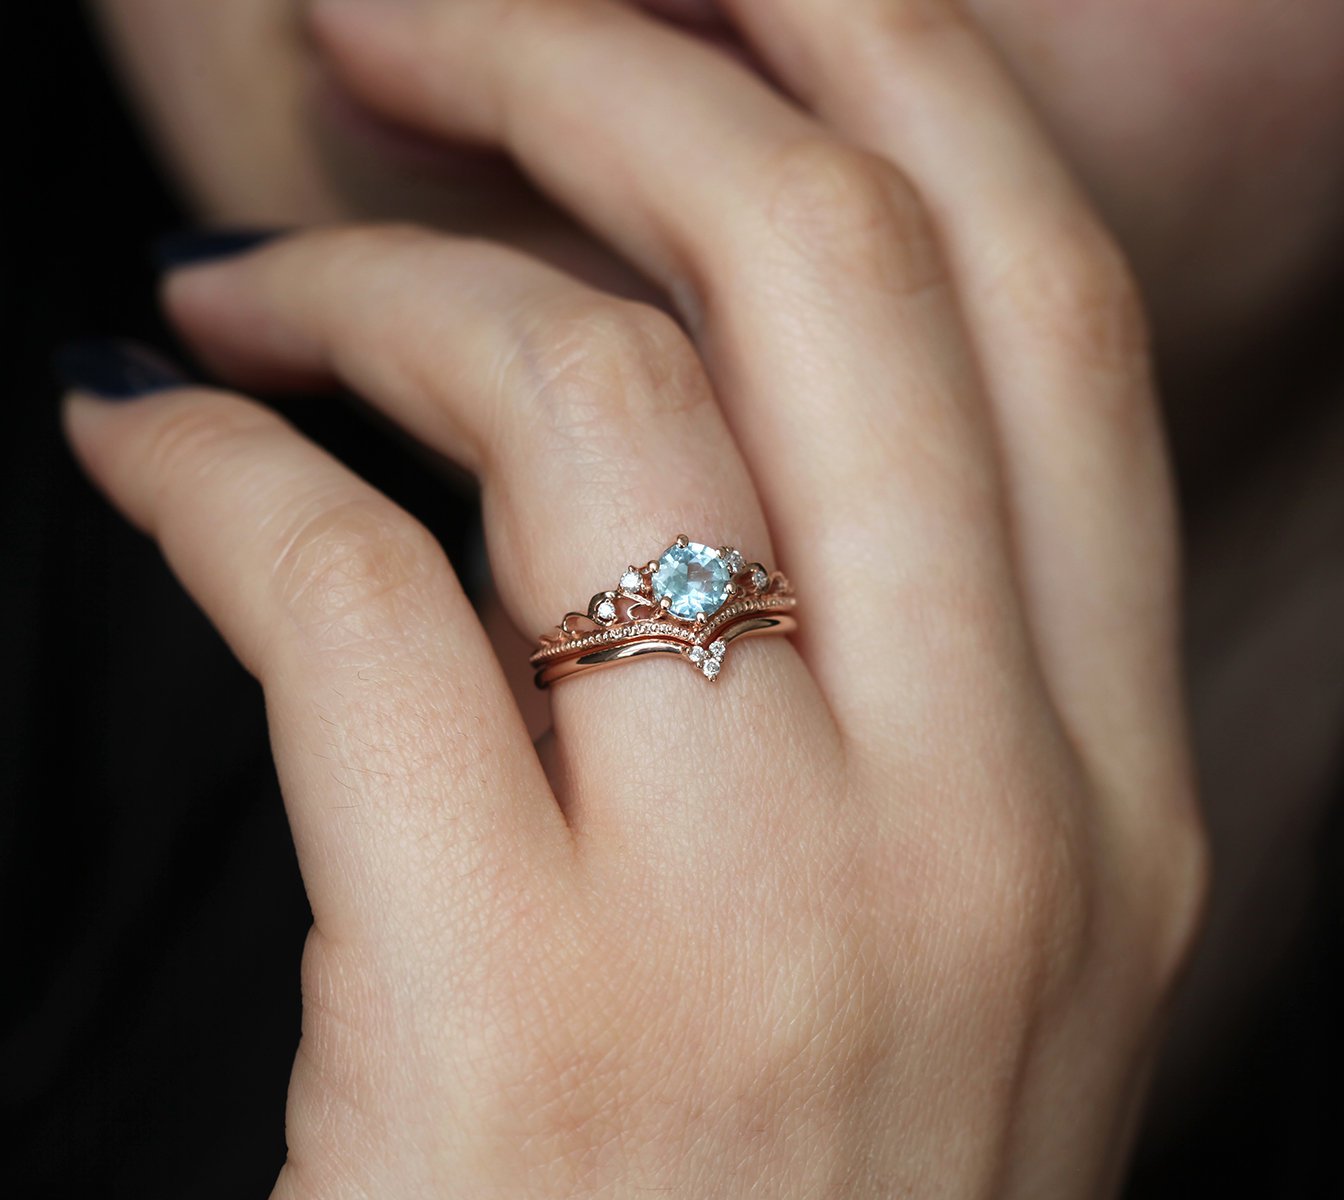 10k White Gold 1.75 Carat Oval Cut Aquamarine Engagement Rings With Twisted  Wedding Band Diamonds Halo Design - Walmart.com